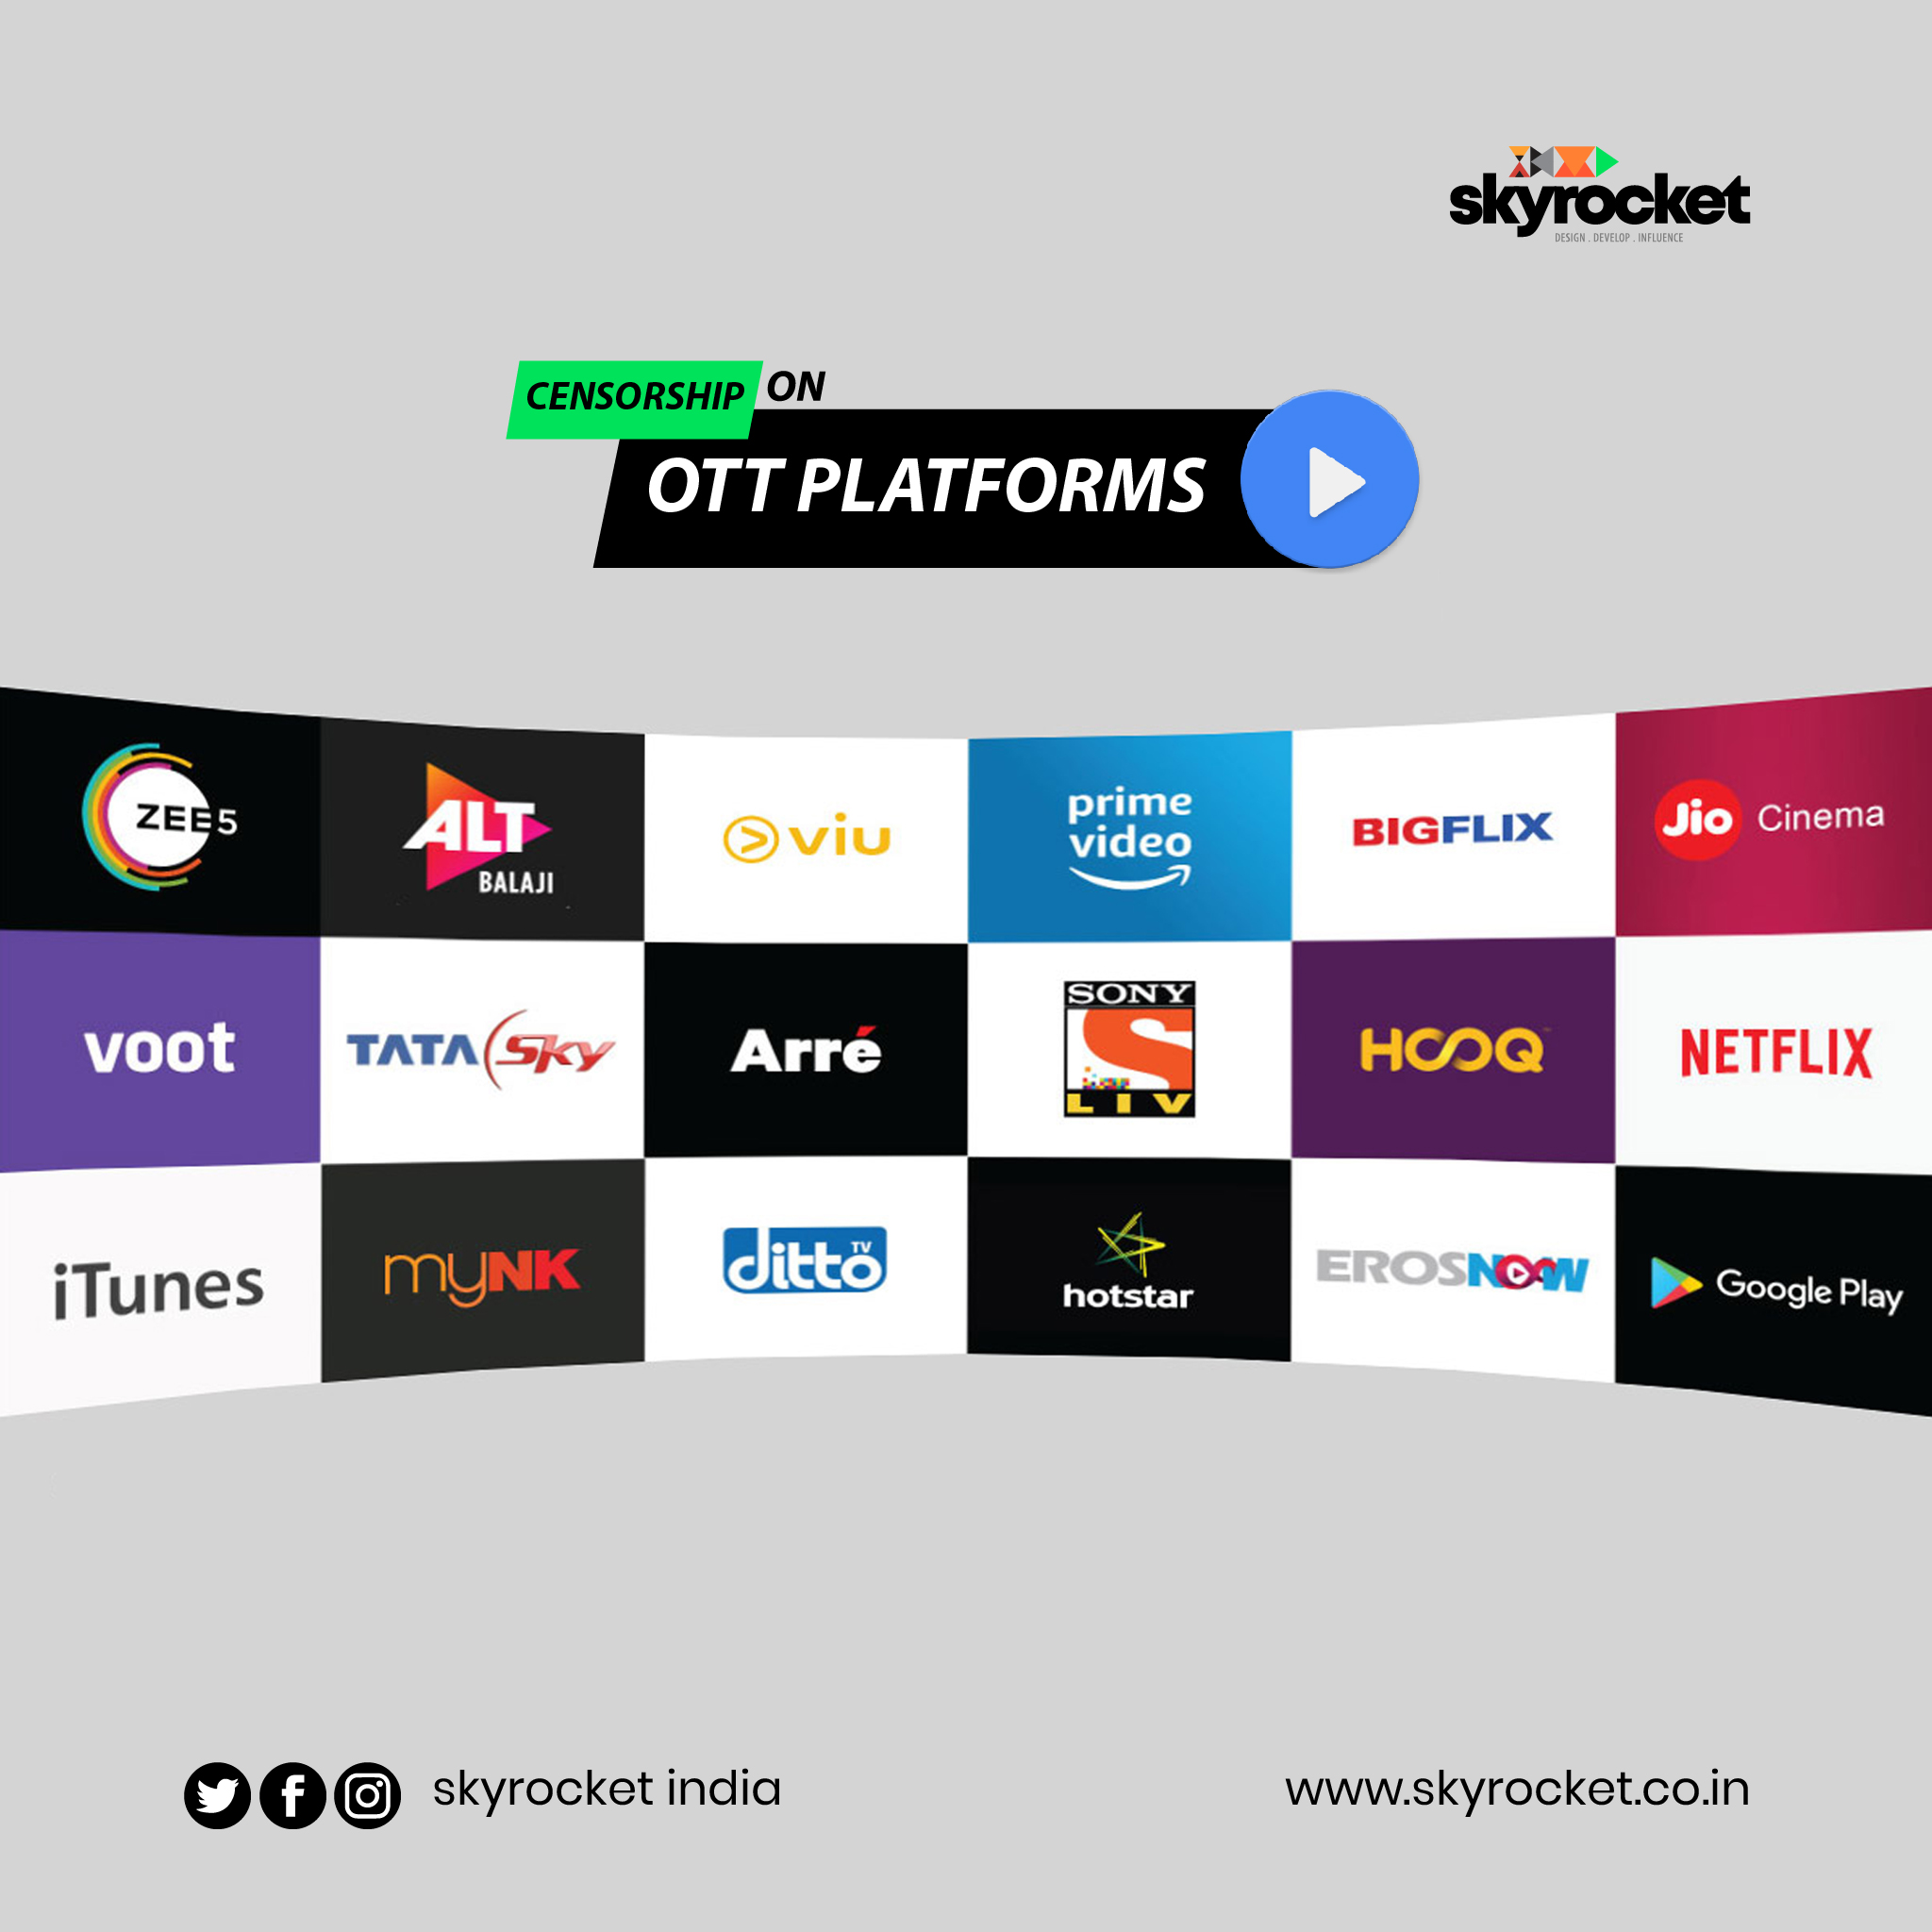 Censorship on OTT platforms in India